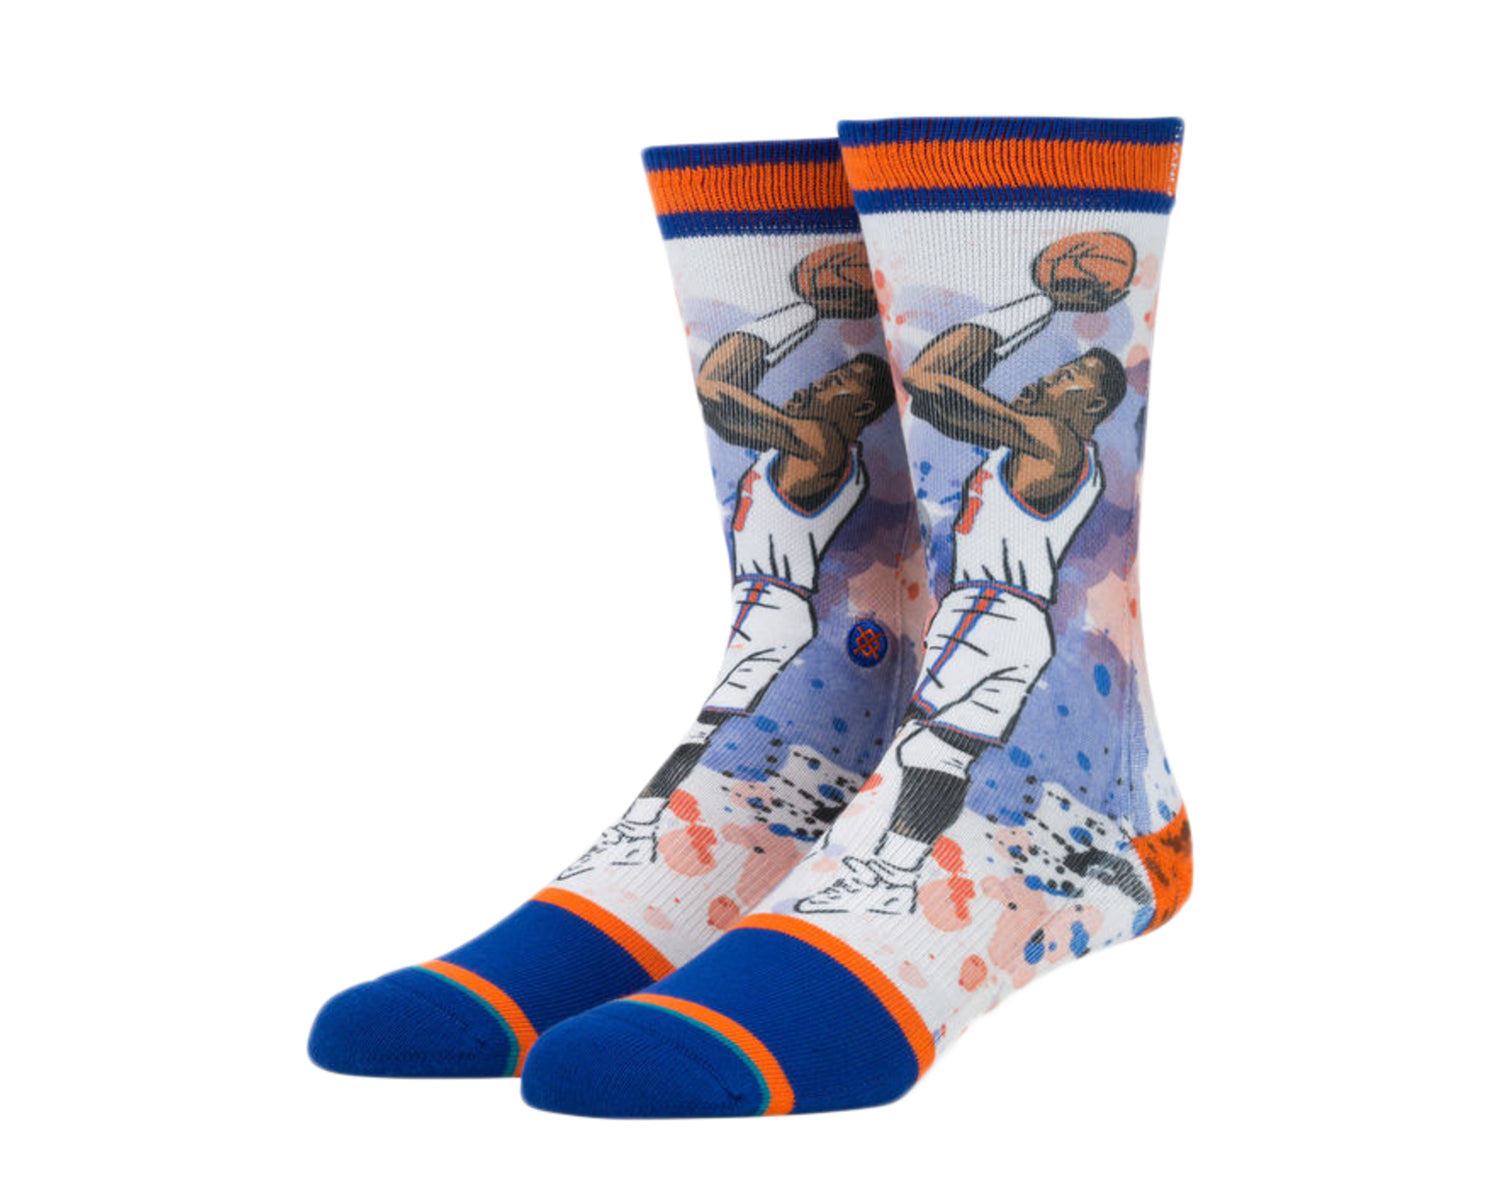 Stance NBA Legends Ewing Crew Socks